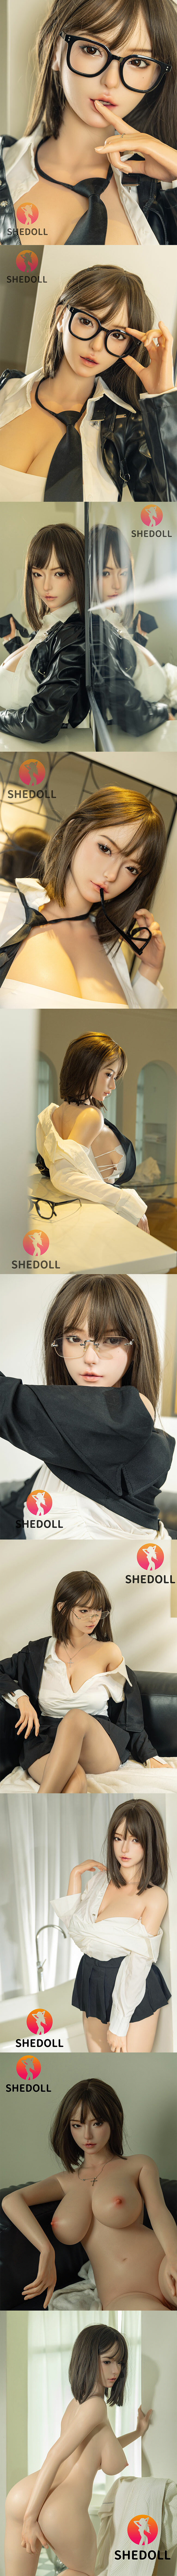 SHEDOLL 全矽膠 163cm H胸 四月 silicone sex doll